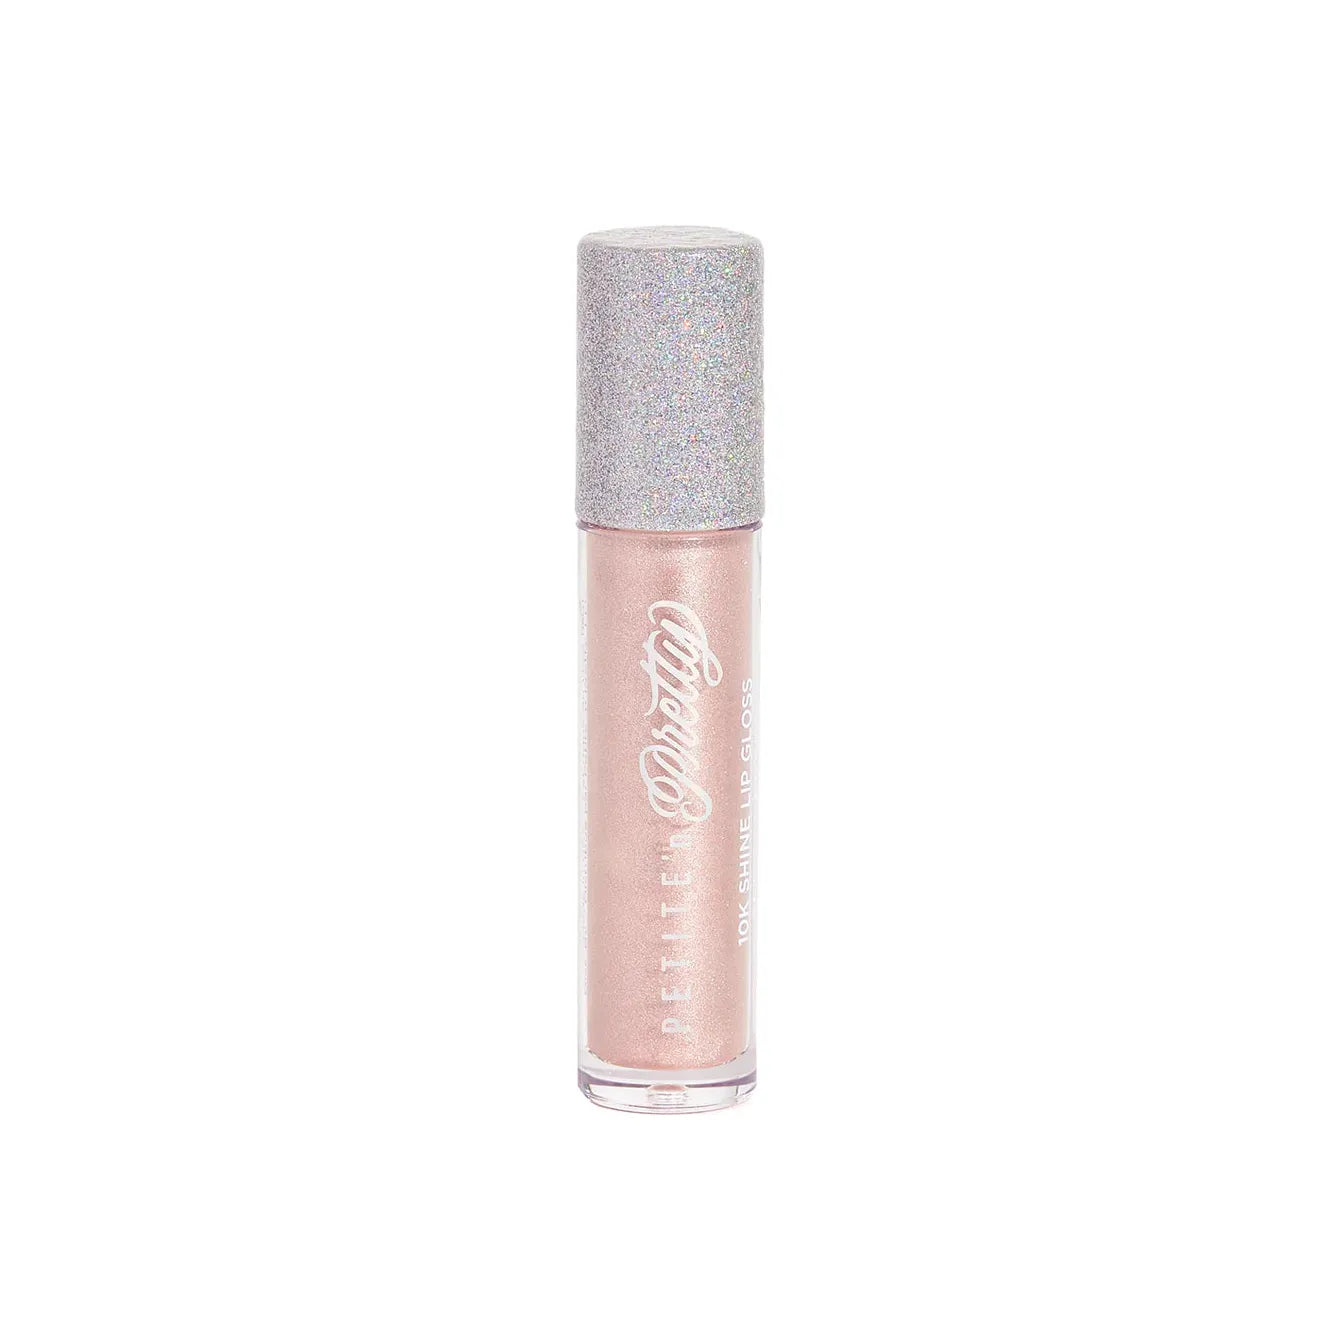 10k shine lip gloss | glow down